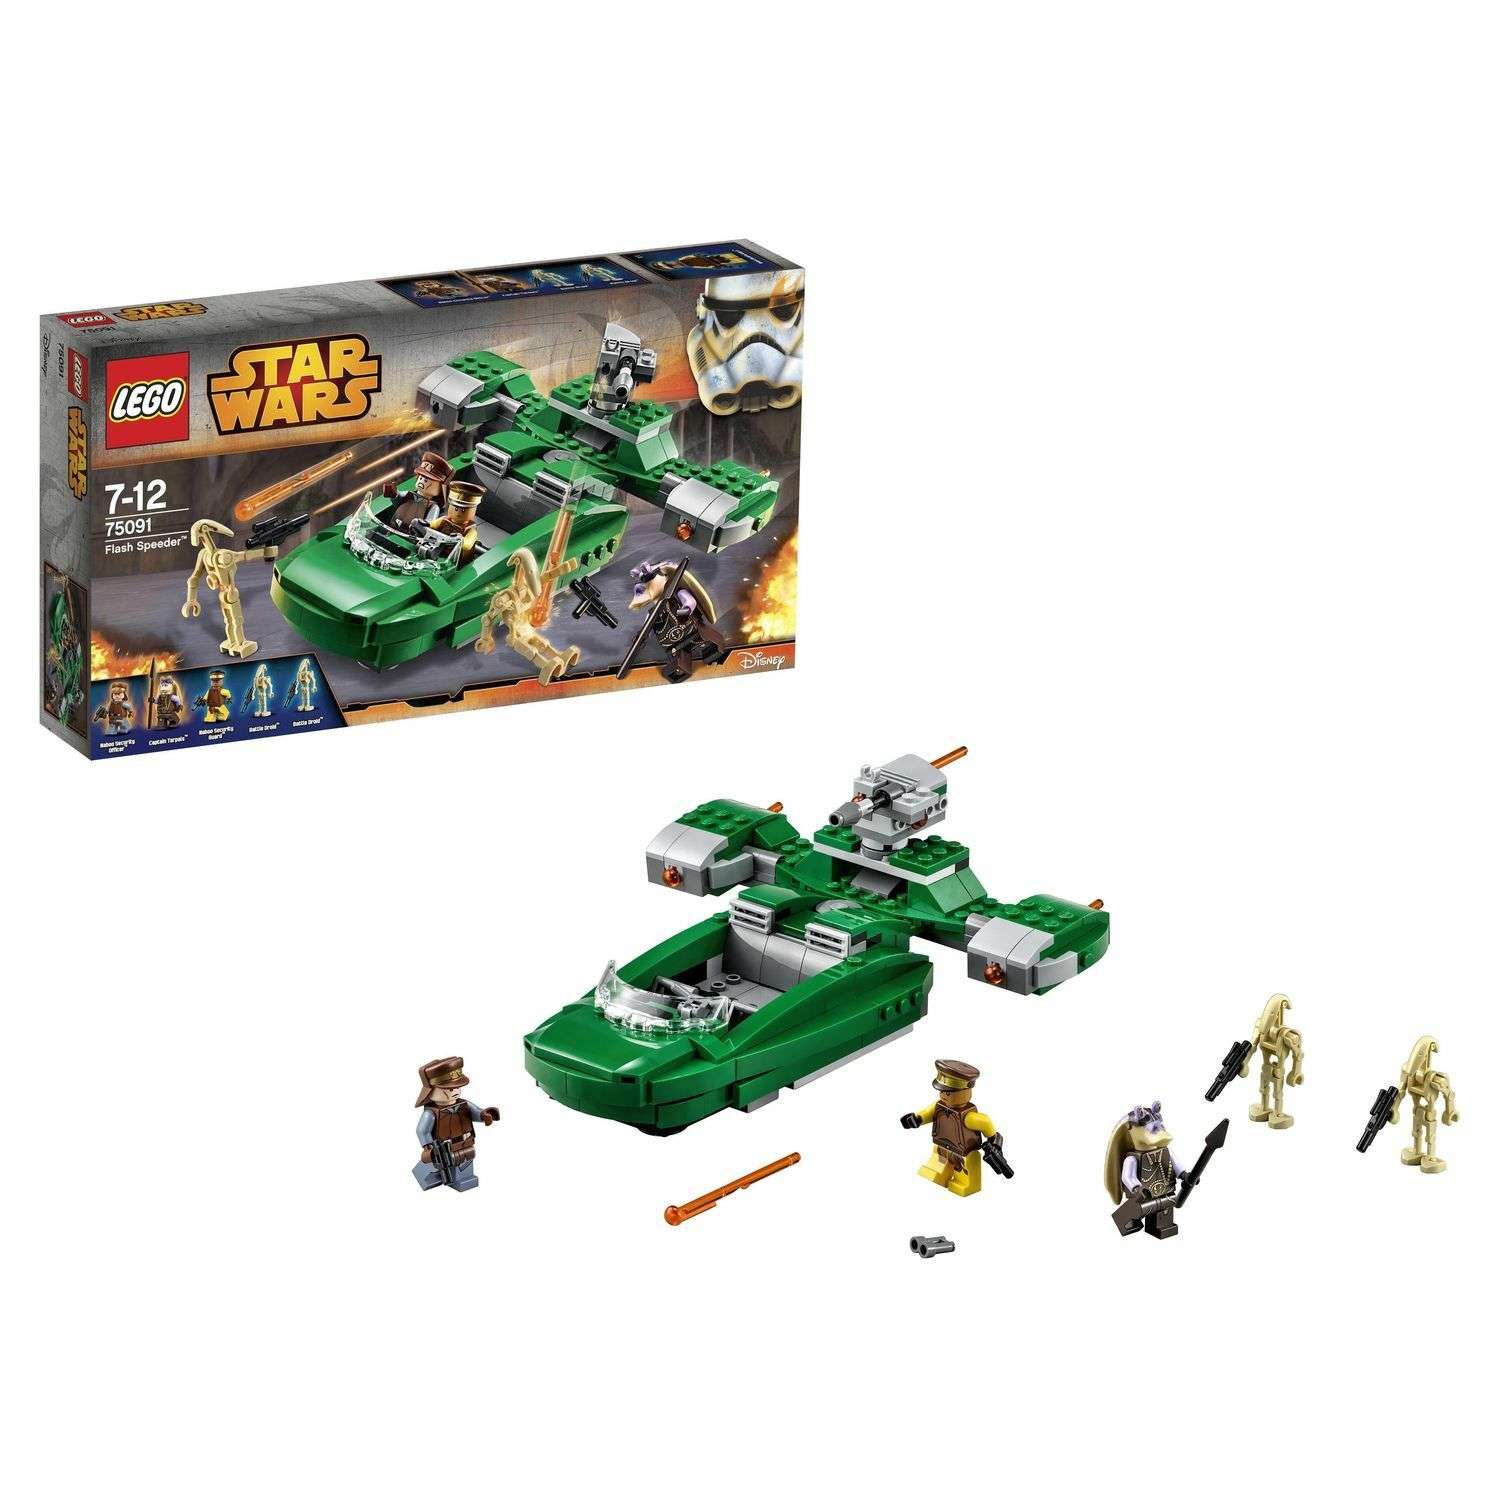 Конструктор LEGO Star Wars TM Флэш-спидер™ (Flash Speeder™) (75091) - фото 1